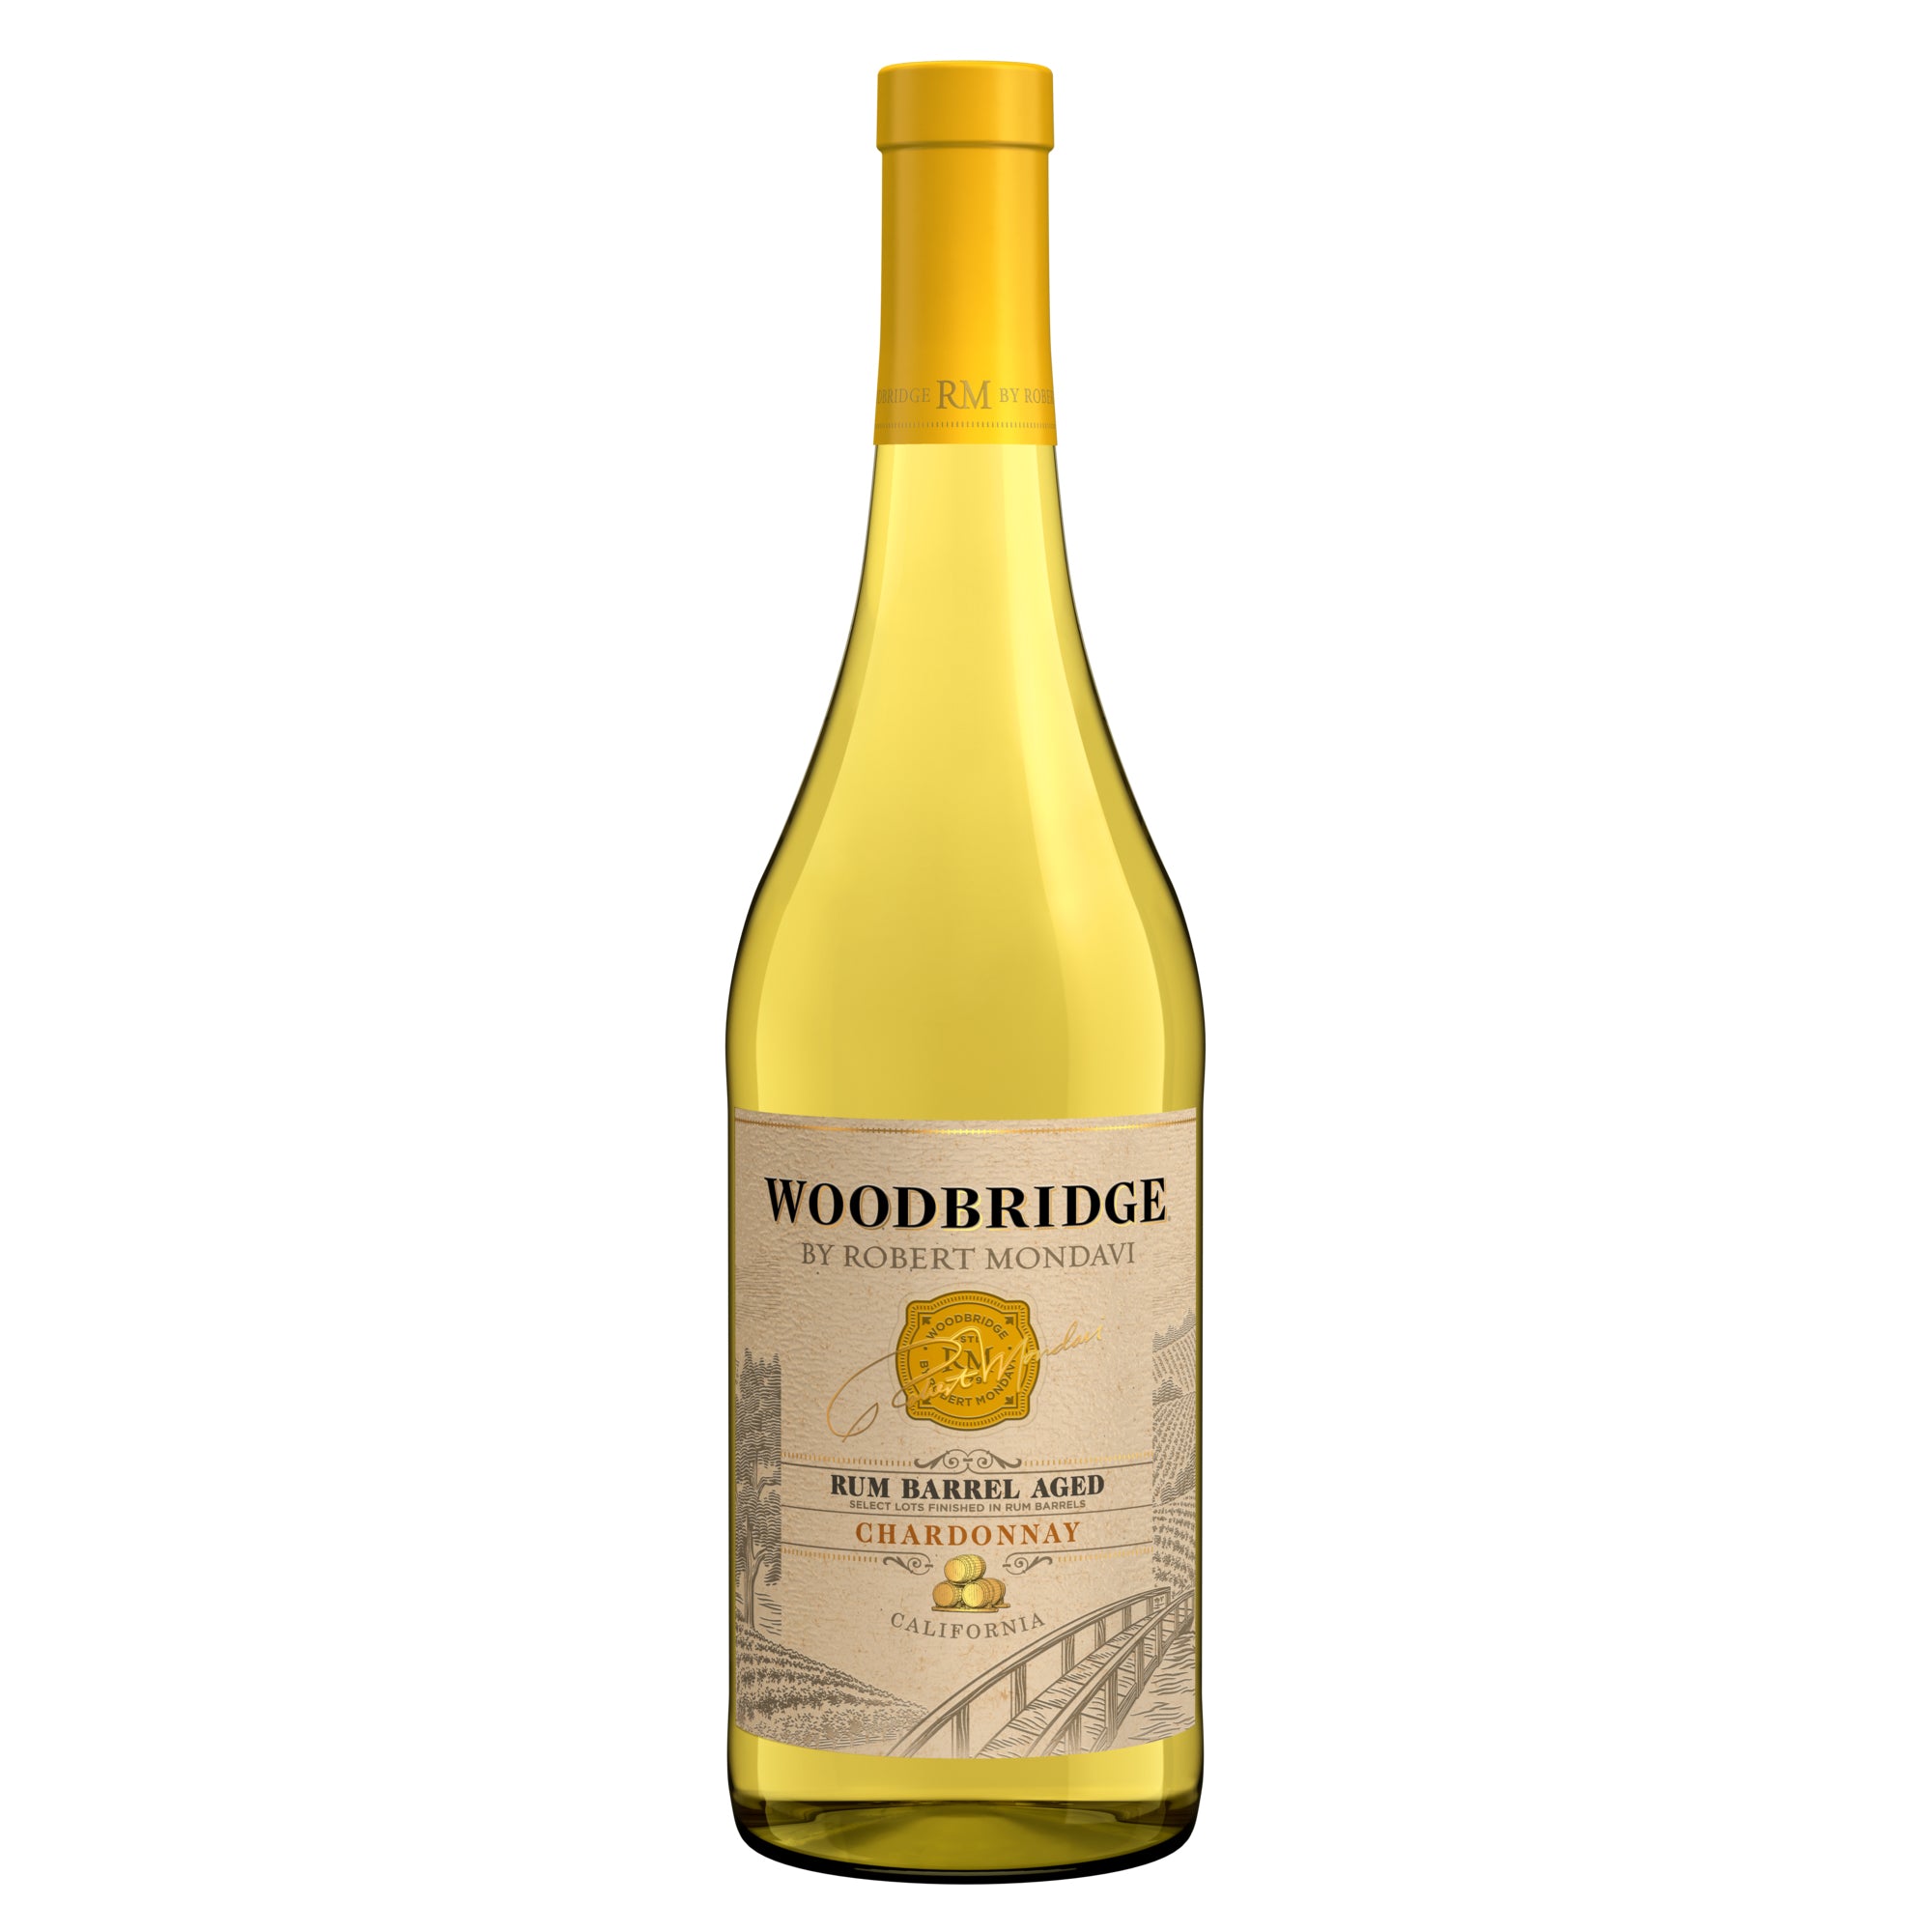 Robert Mondavi Woodbridge Rum Barrel Aged Chardonnay